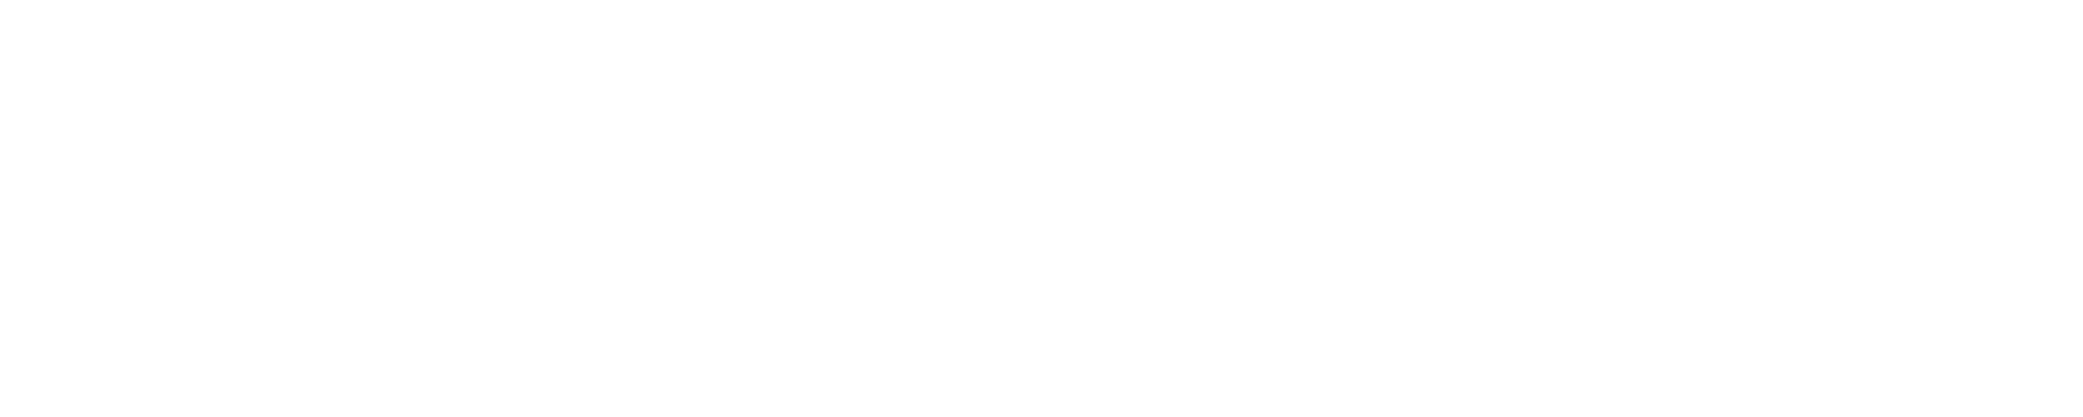 Building Dimensions: 1,636' x 620'